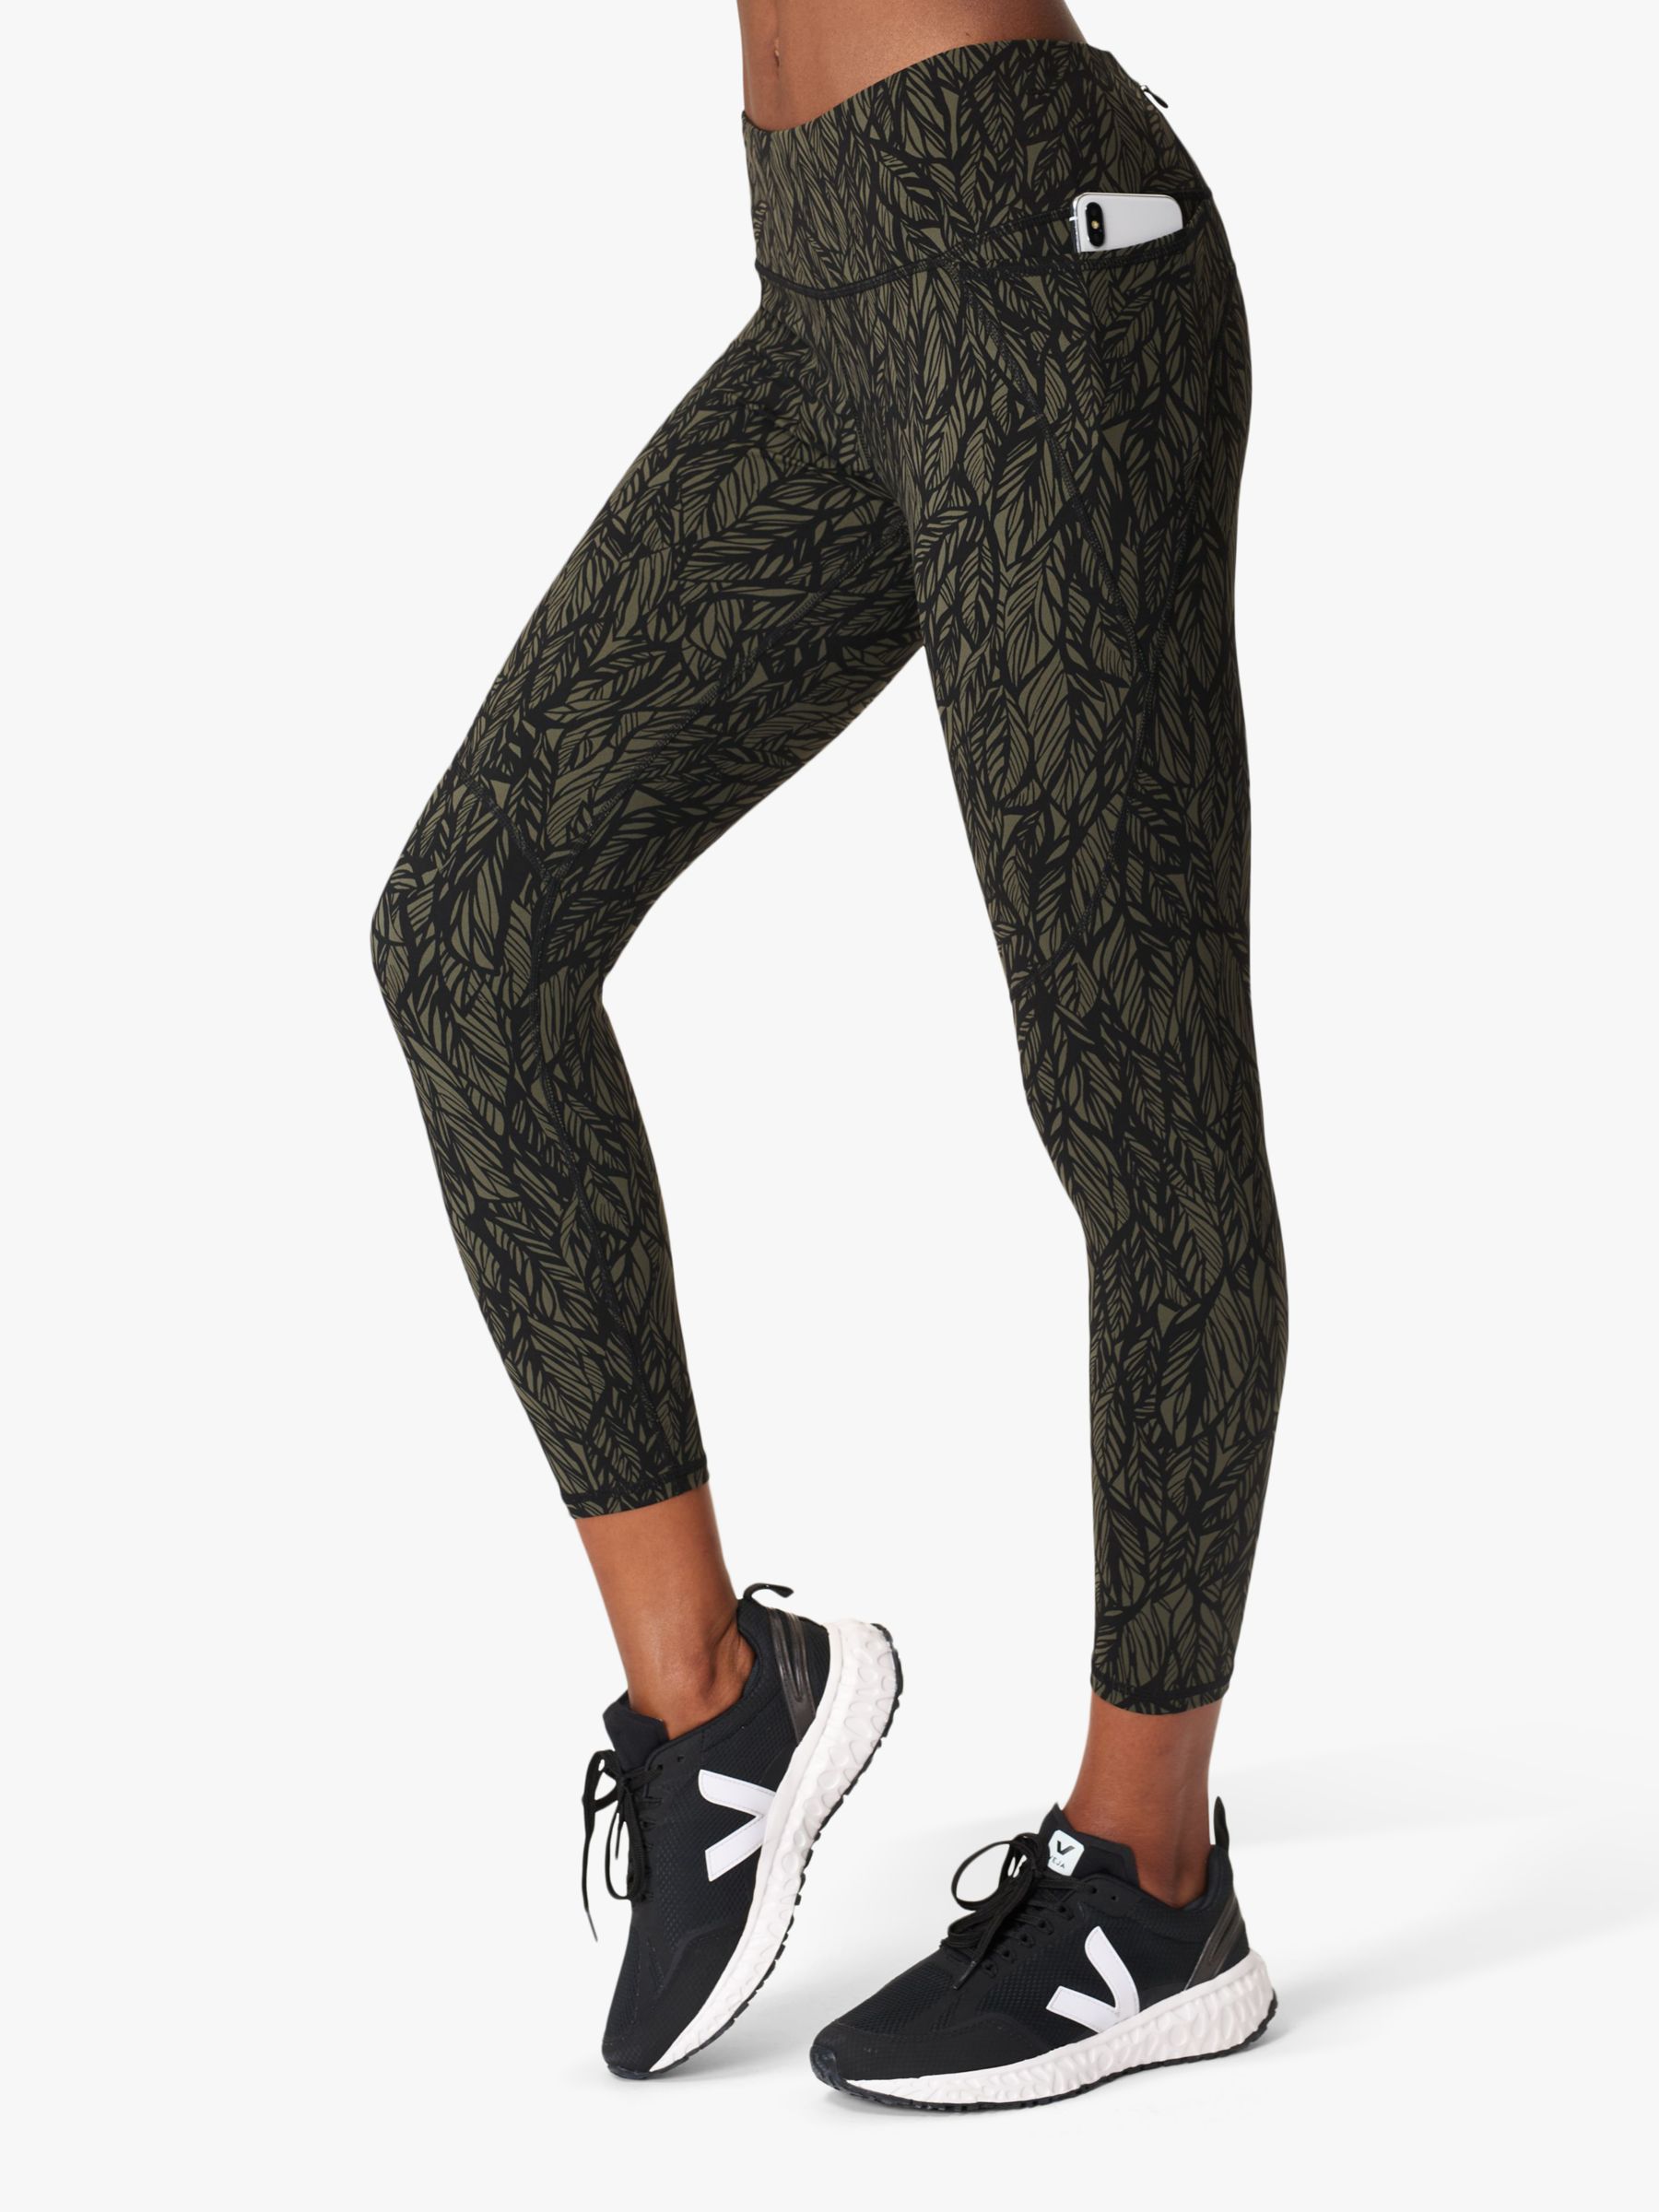 Sweaty Betty 7/8 Workout Leggings, Green Leaf Print